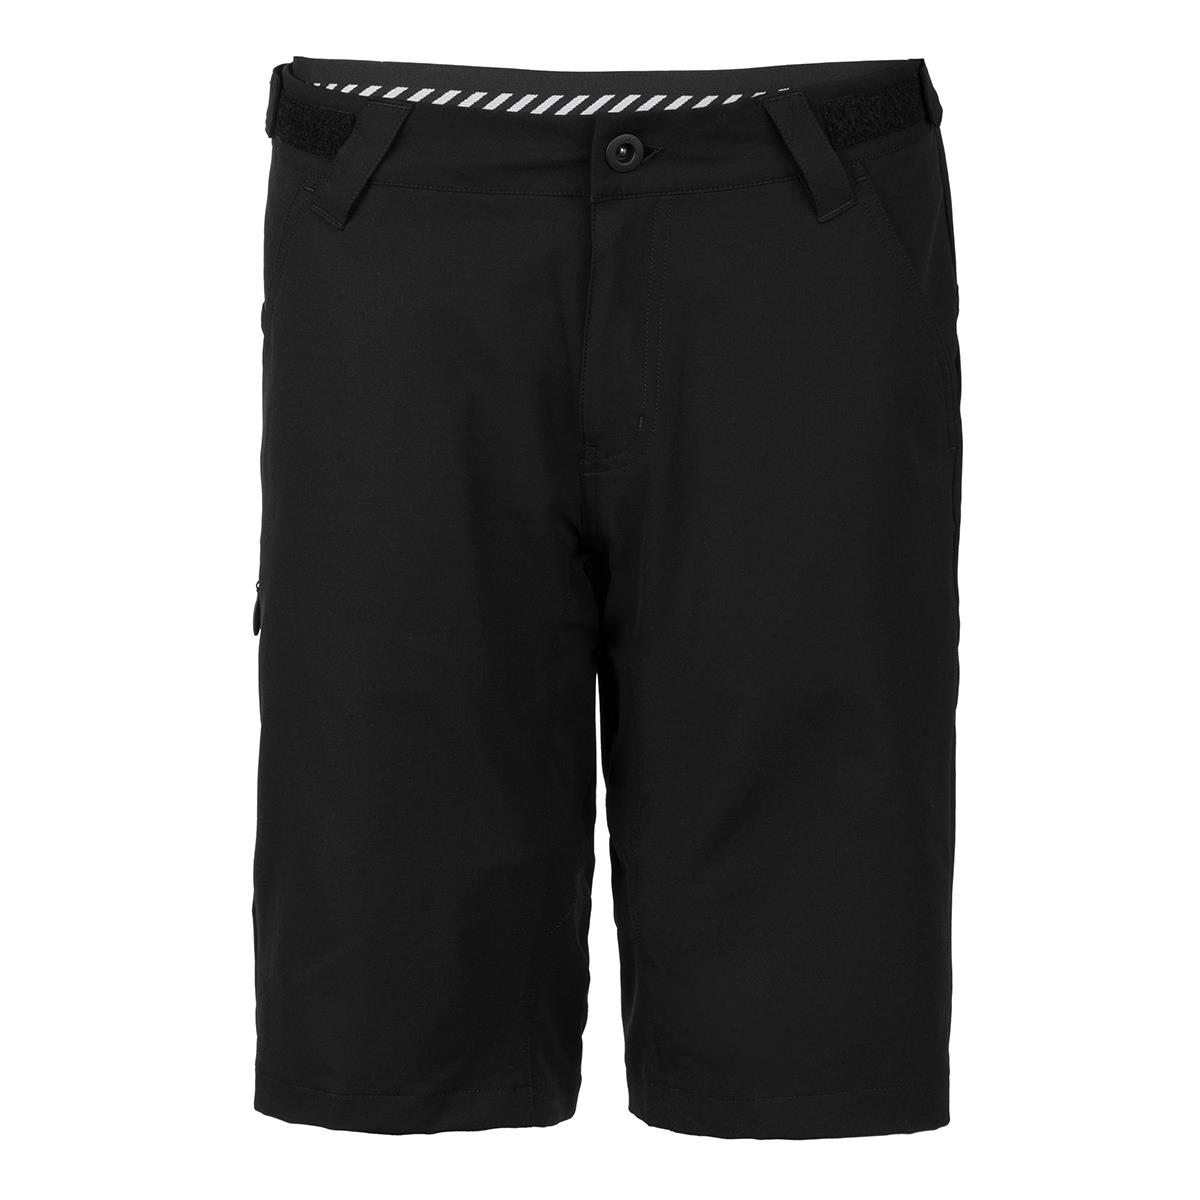 Giro MTB Shorts ARC incl. Inner Short - Black